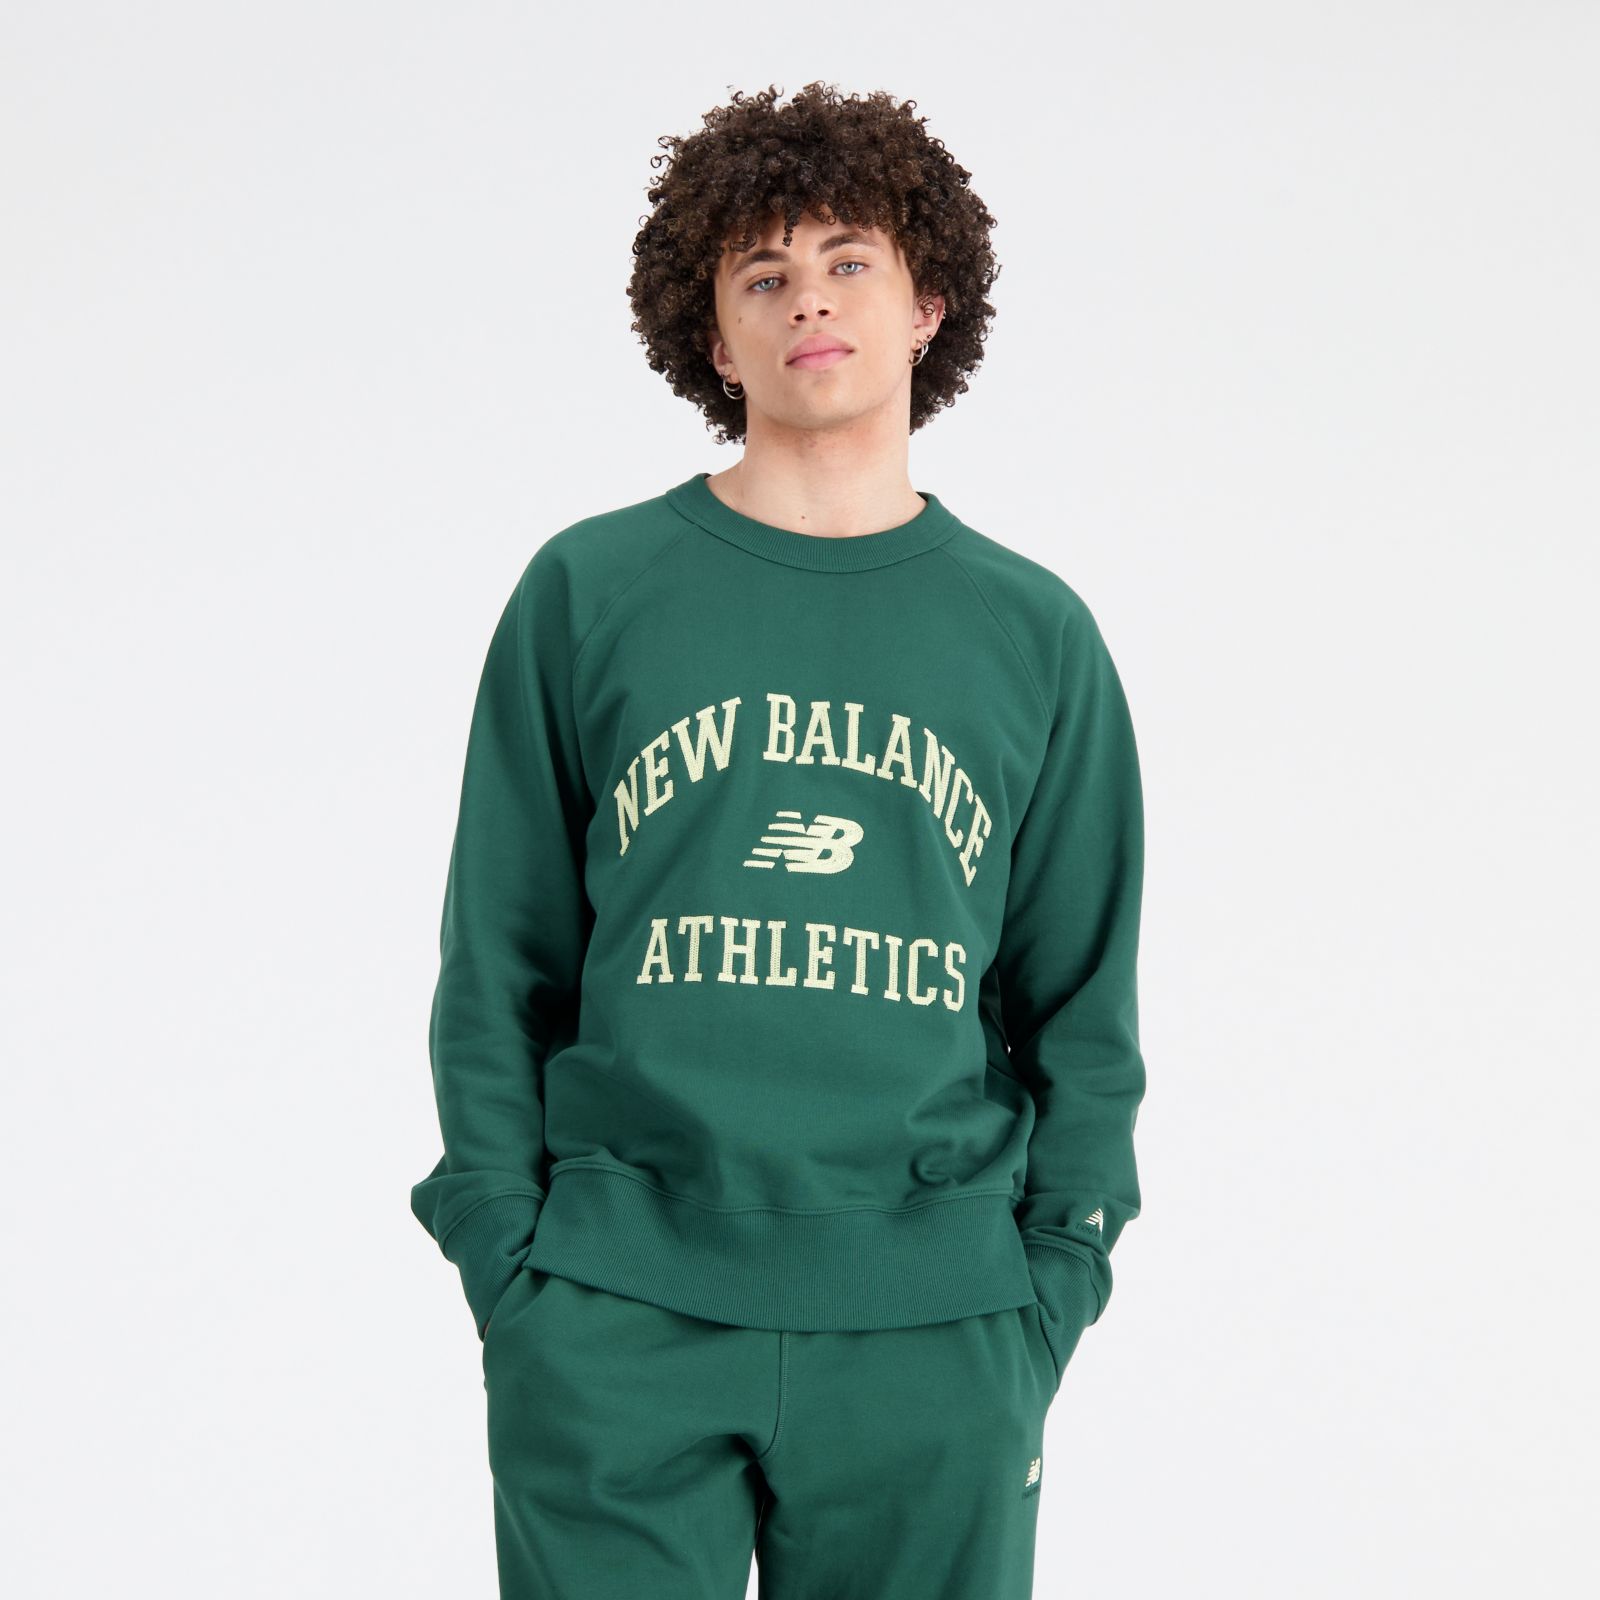 Athletics Baseball Jersey - Green - Live Fit. Apparel